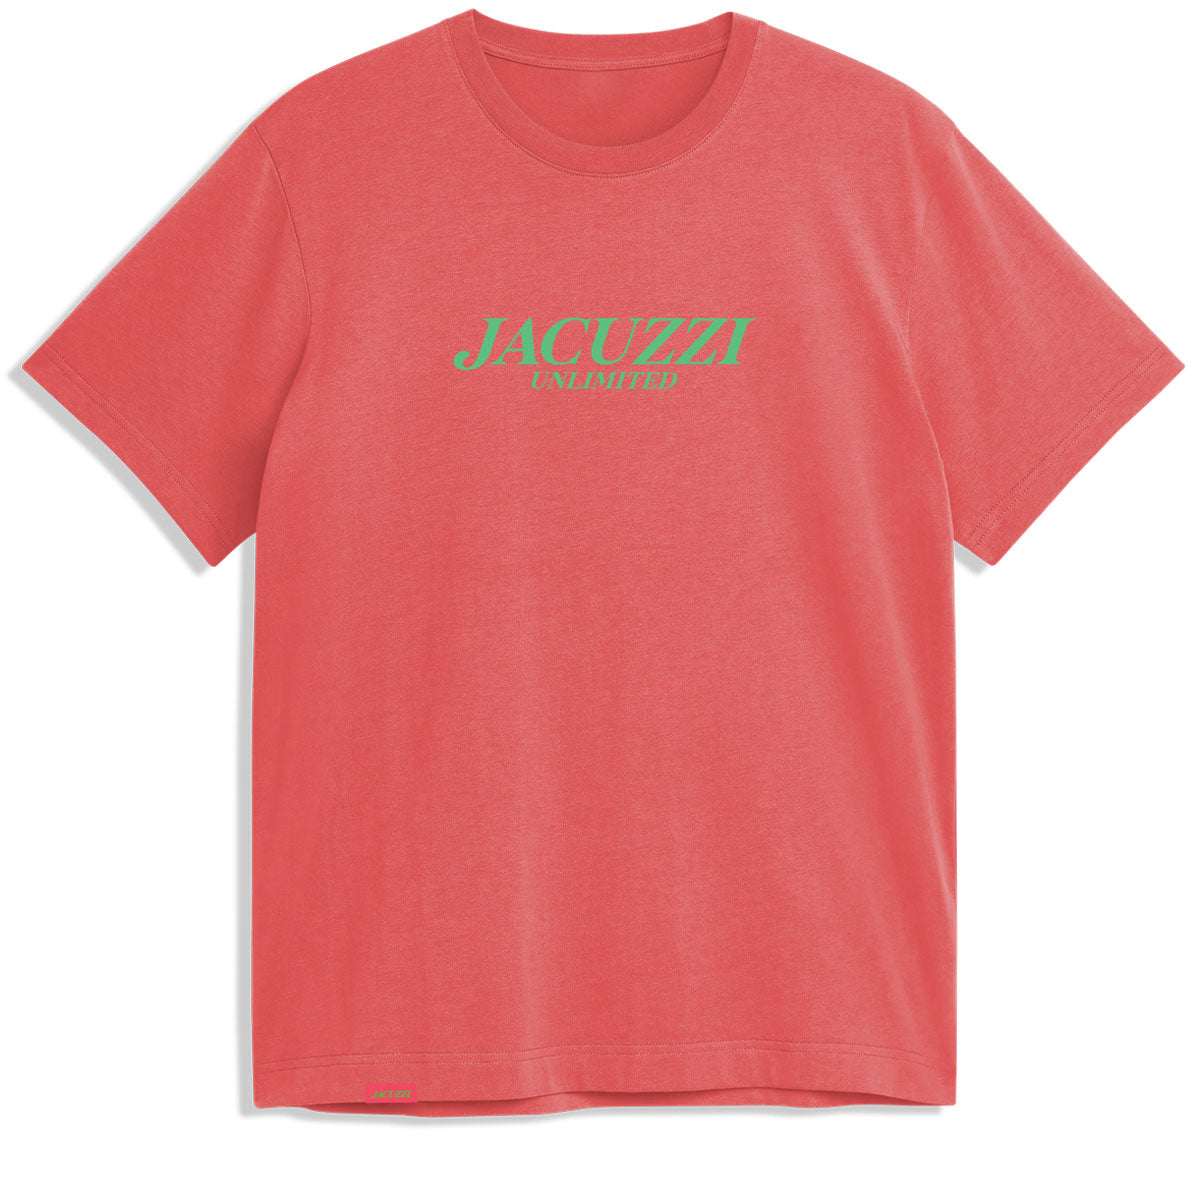 Jacuzzi Flavor T-Shirt - Coral Silk image 1